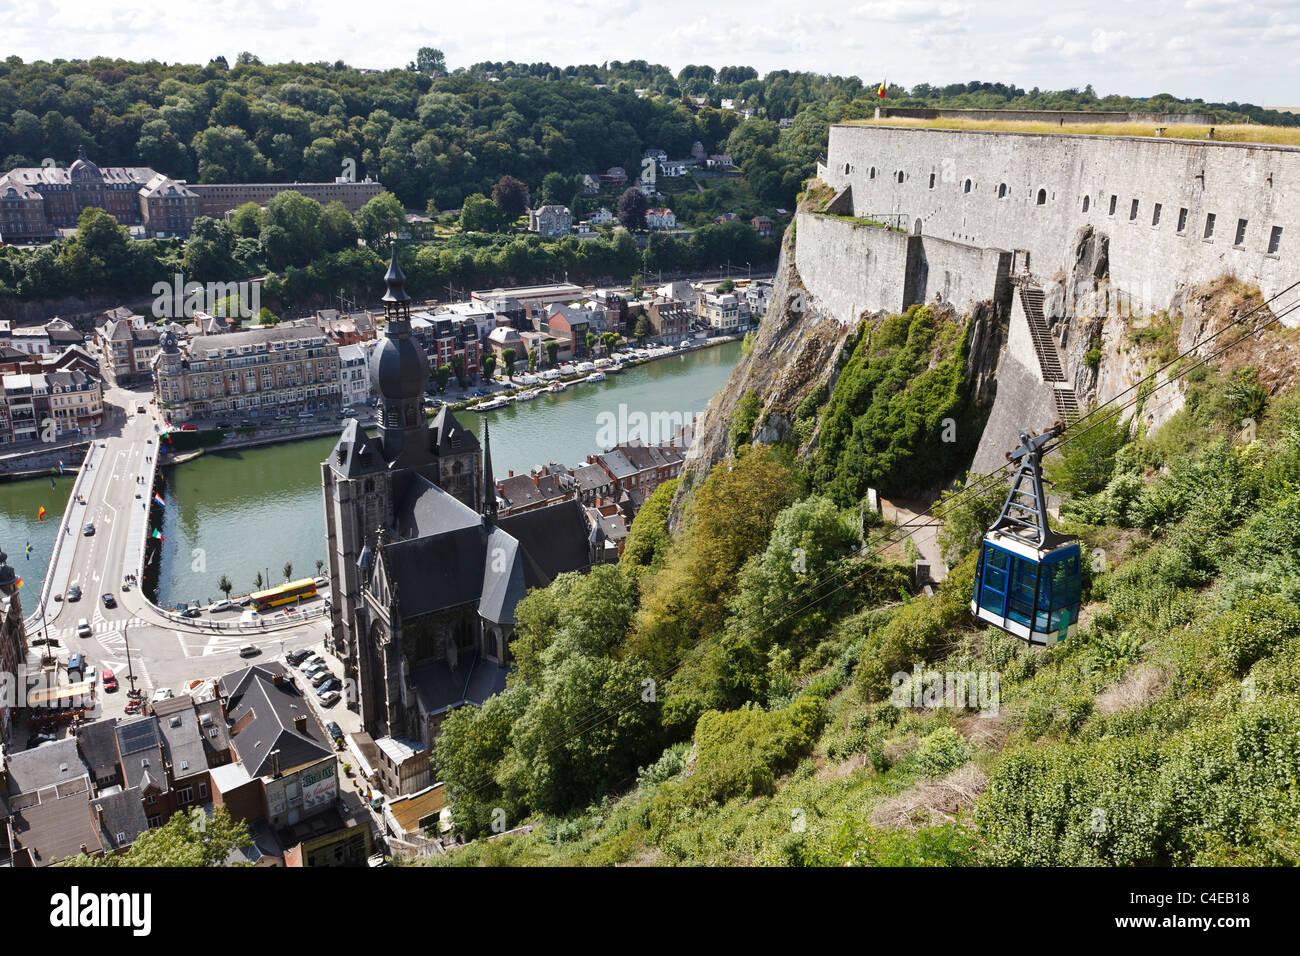 Cablecar linking the Citadel at Dinant with the town below, Wallonia, Belgium Stock Photo